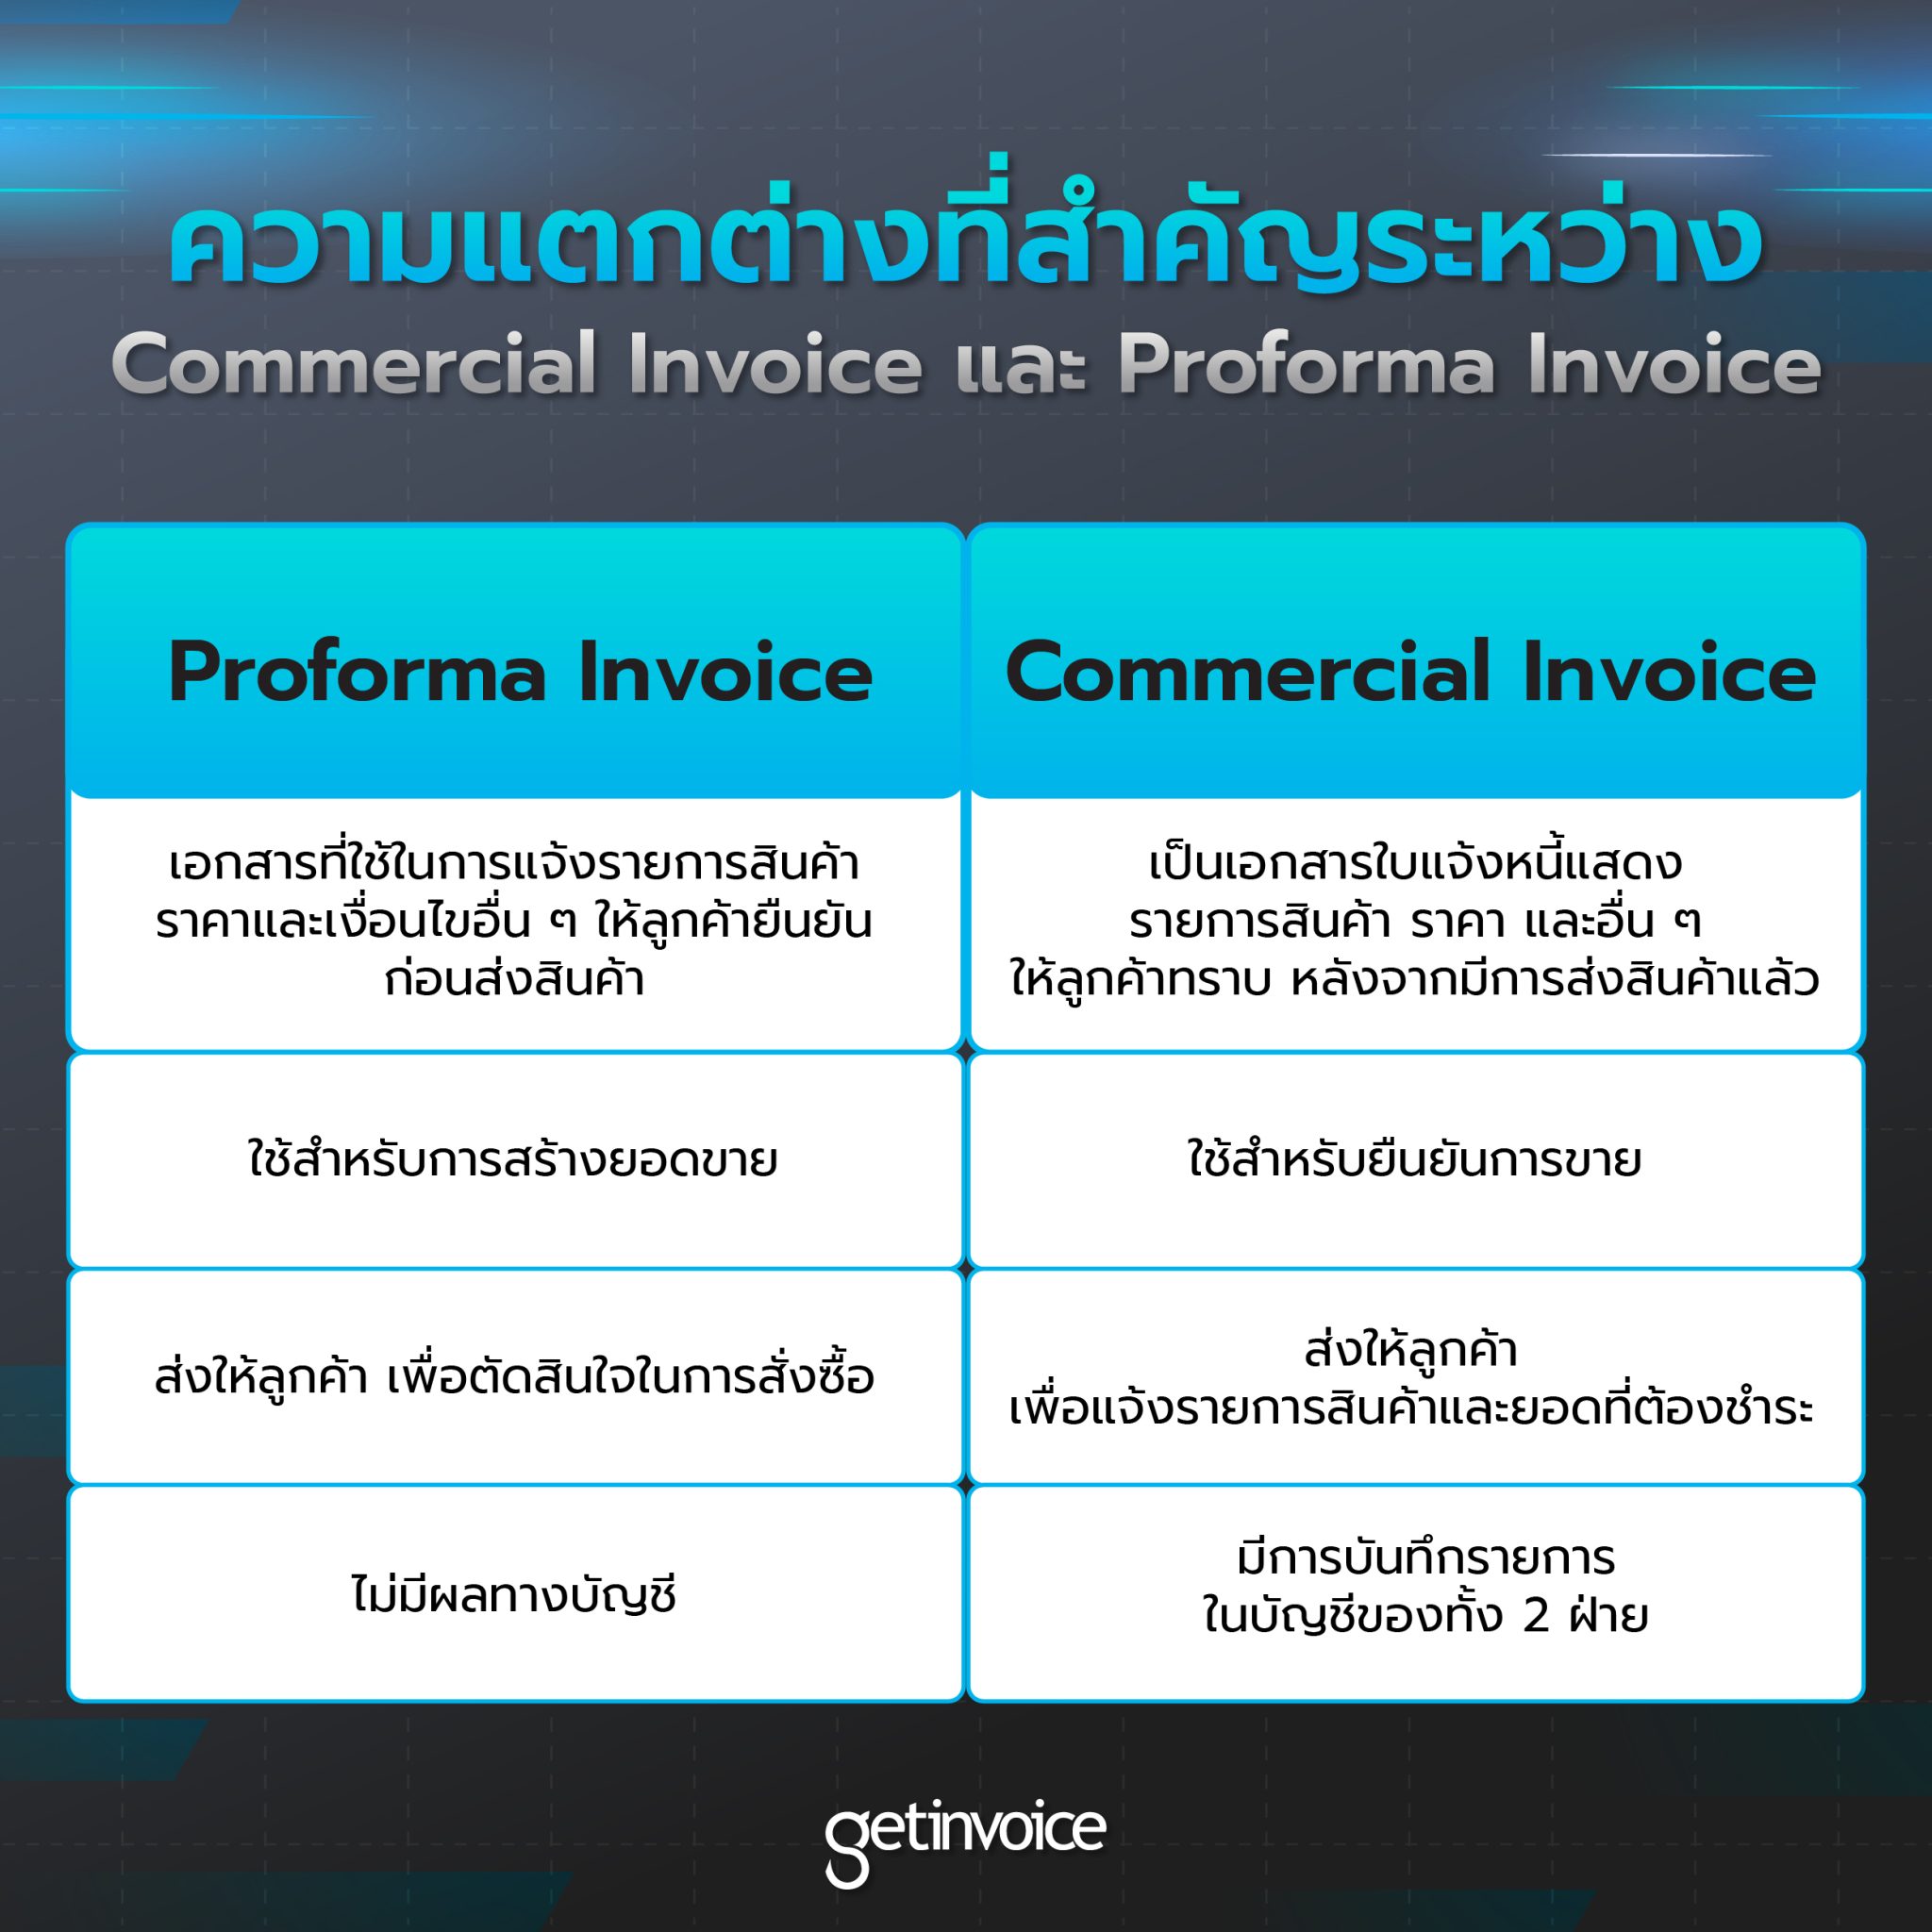 Proforma Invoice Vs Commercial Invoice Major Differen 0550